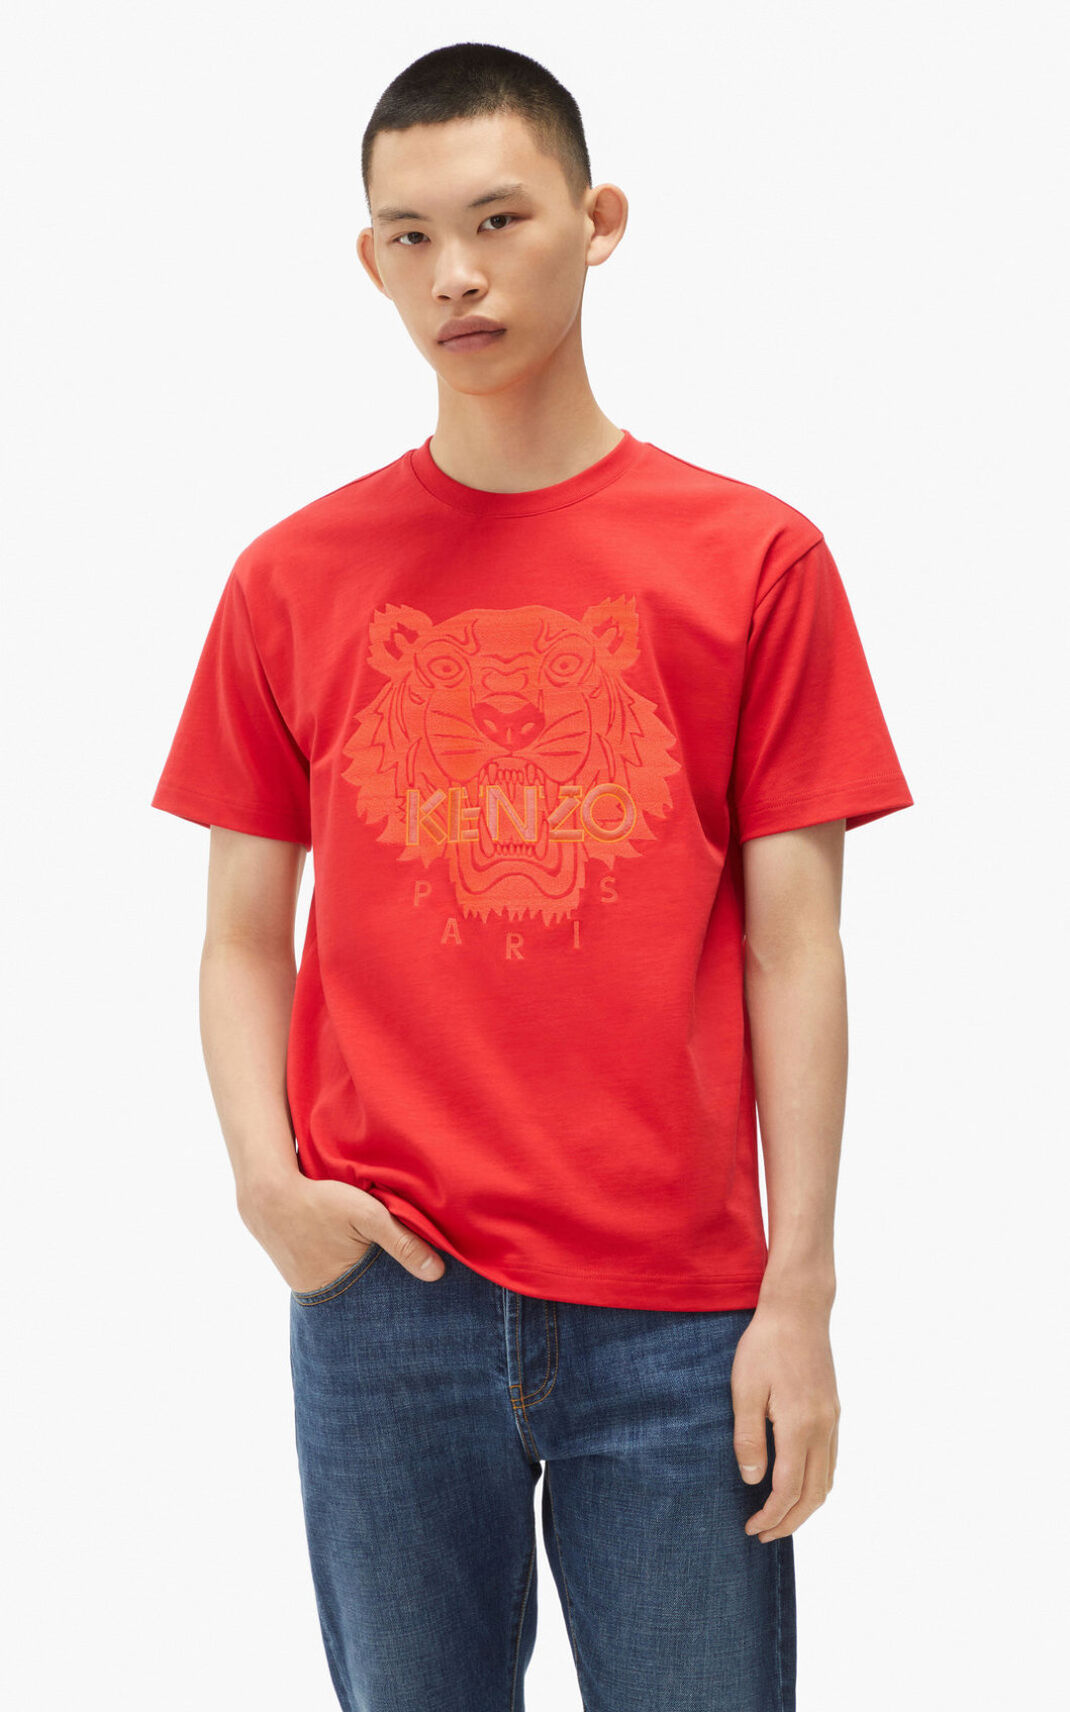 Camisetas Kenzo Tiger loose fitting Hombre Rojas - SKU.0510855